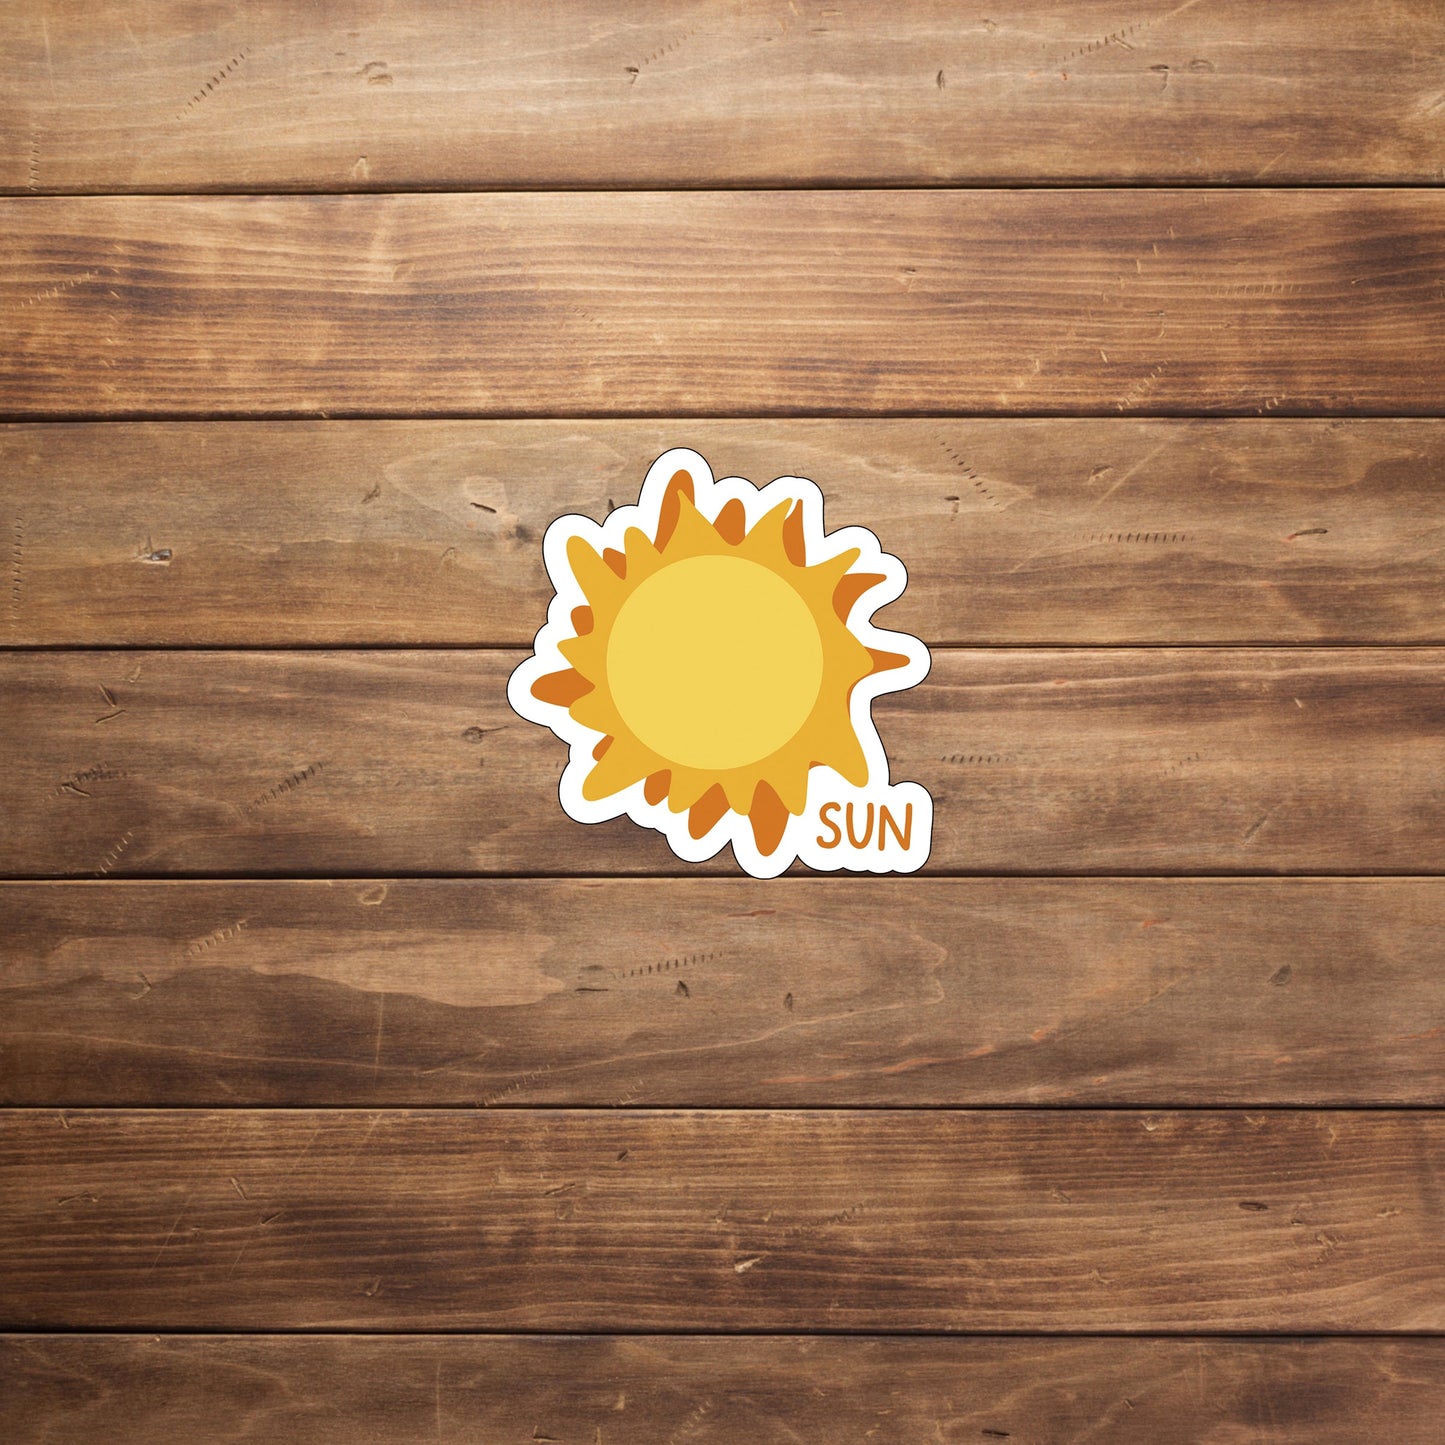 Planet stickers () Stickers, Sun Sticker